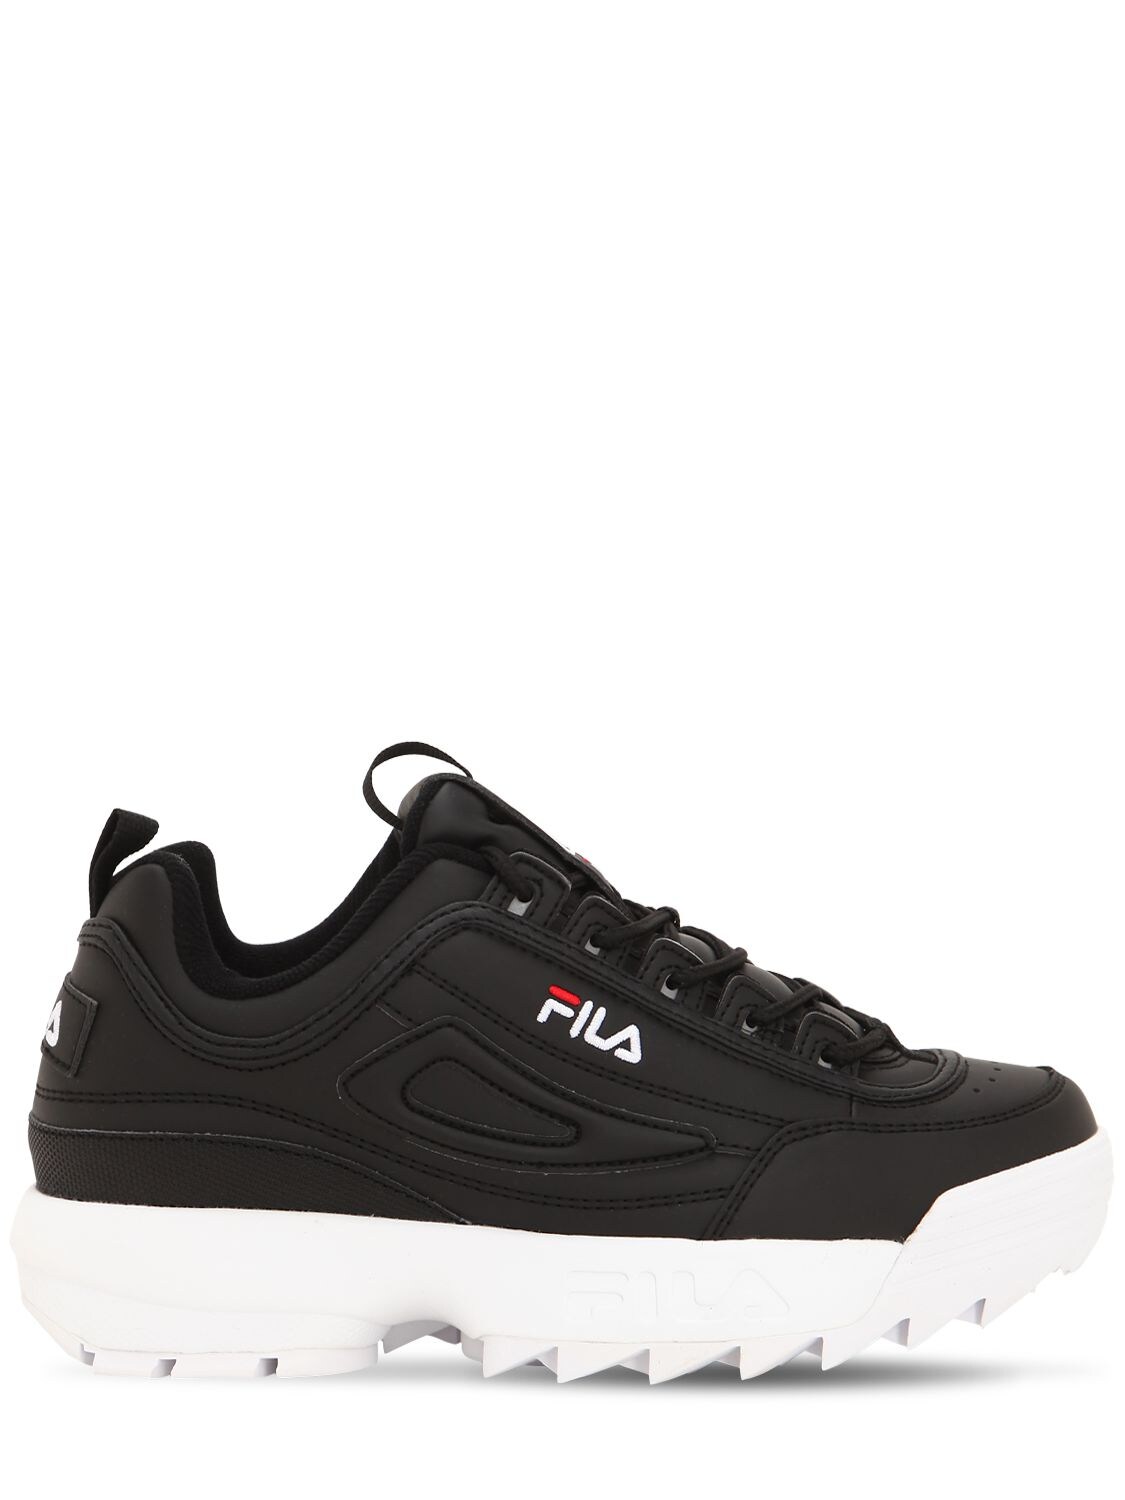 Fila Disruptor Low Wmn Sneakers In Black,white